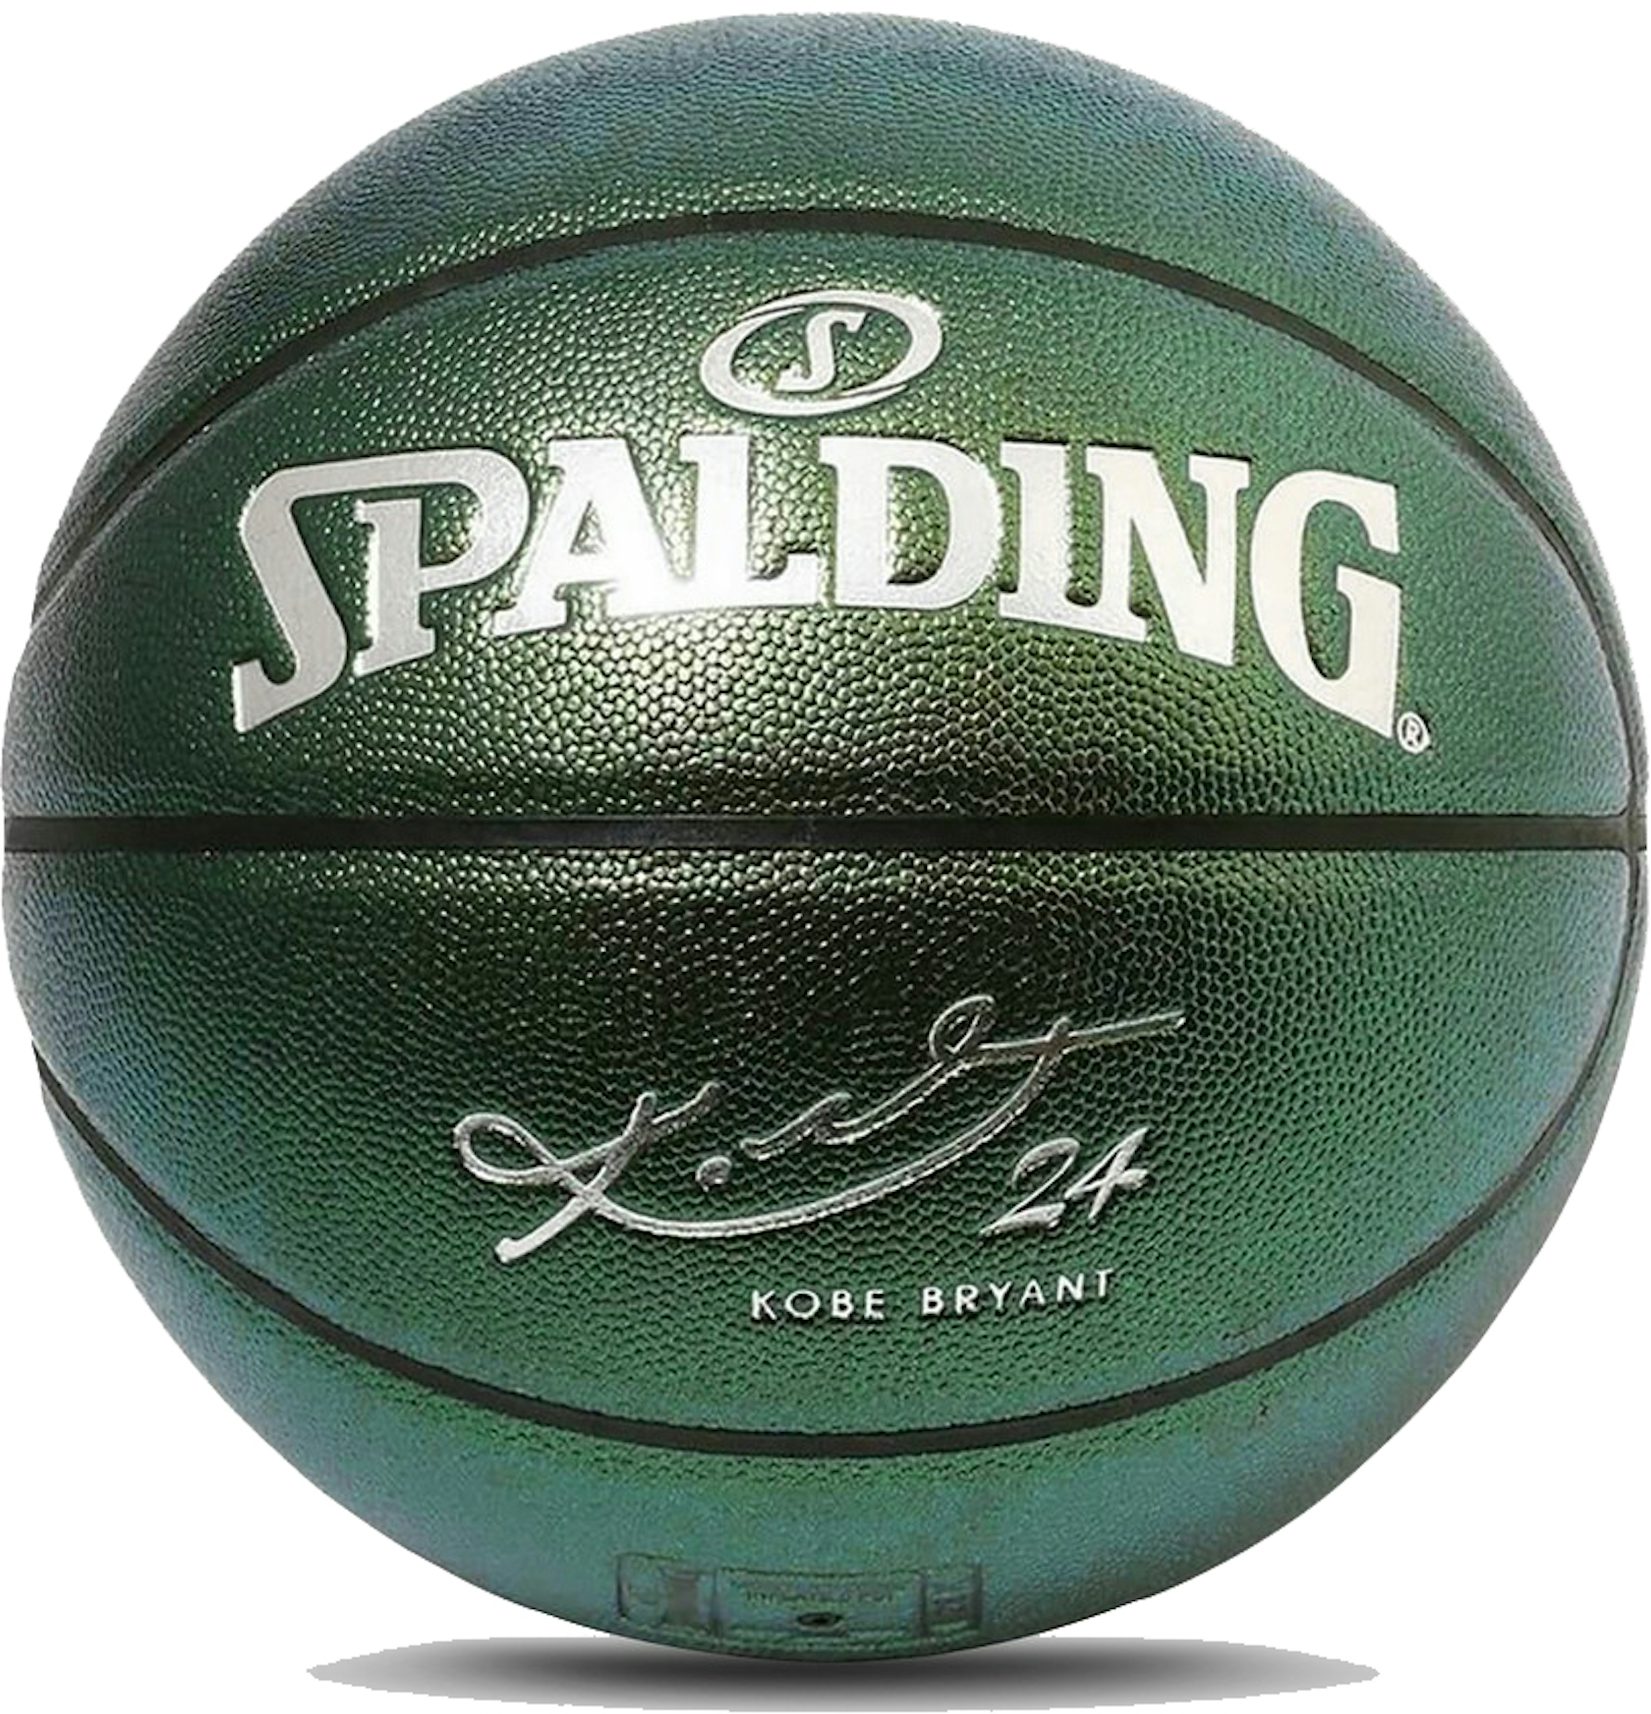 Basketball - Composite Green Spalding Size Bryant FW20 US 7 - Kobe